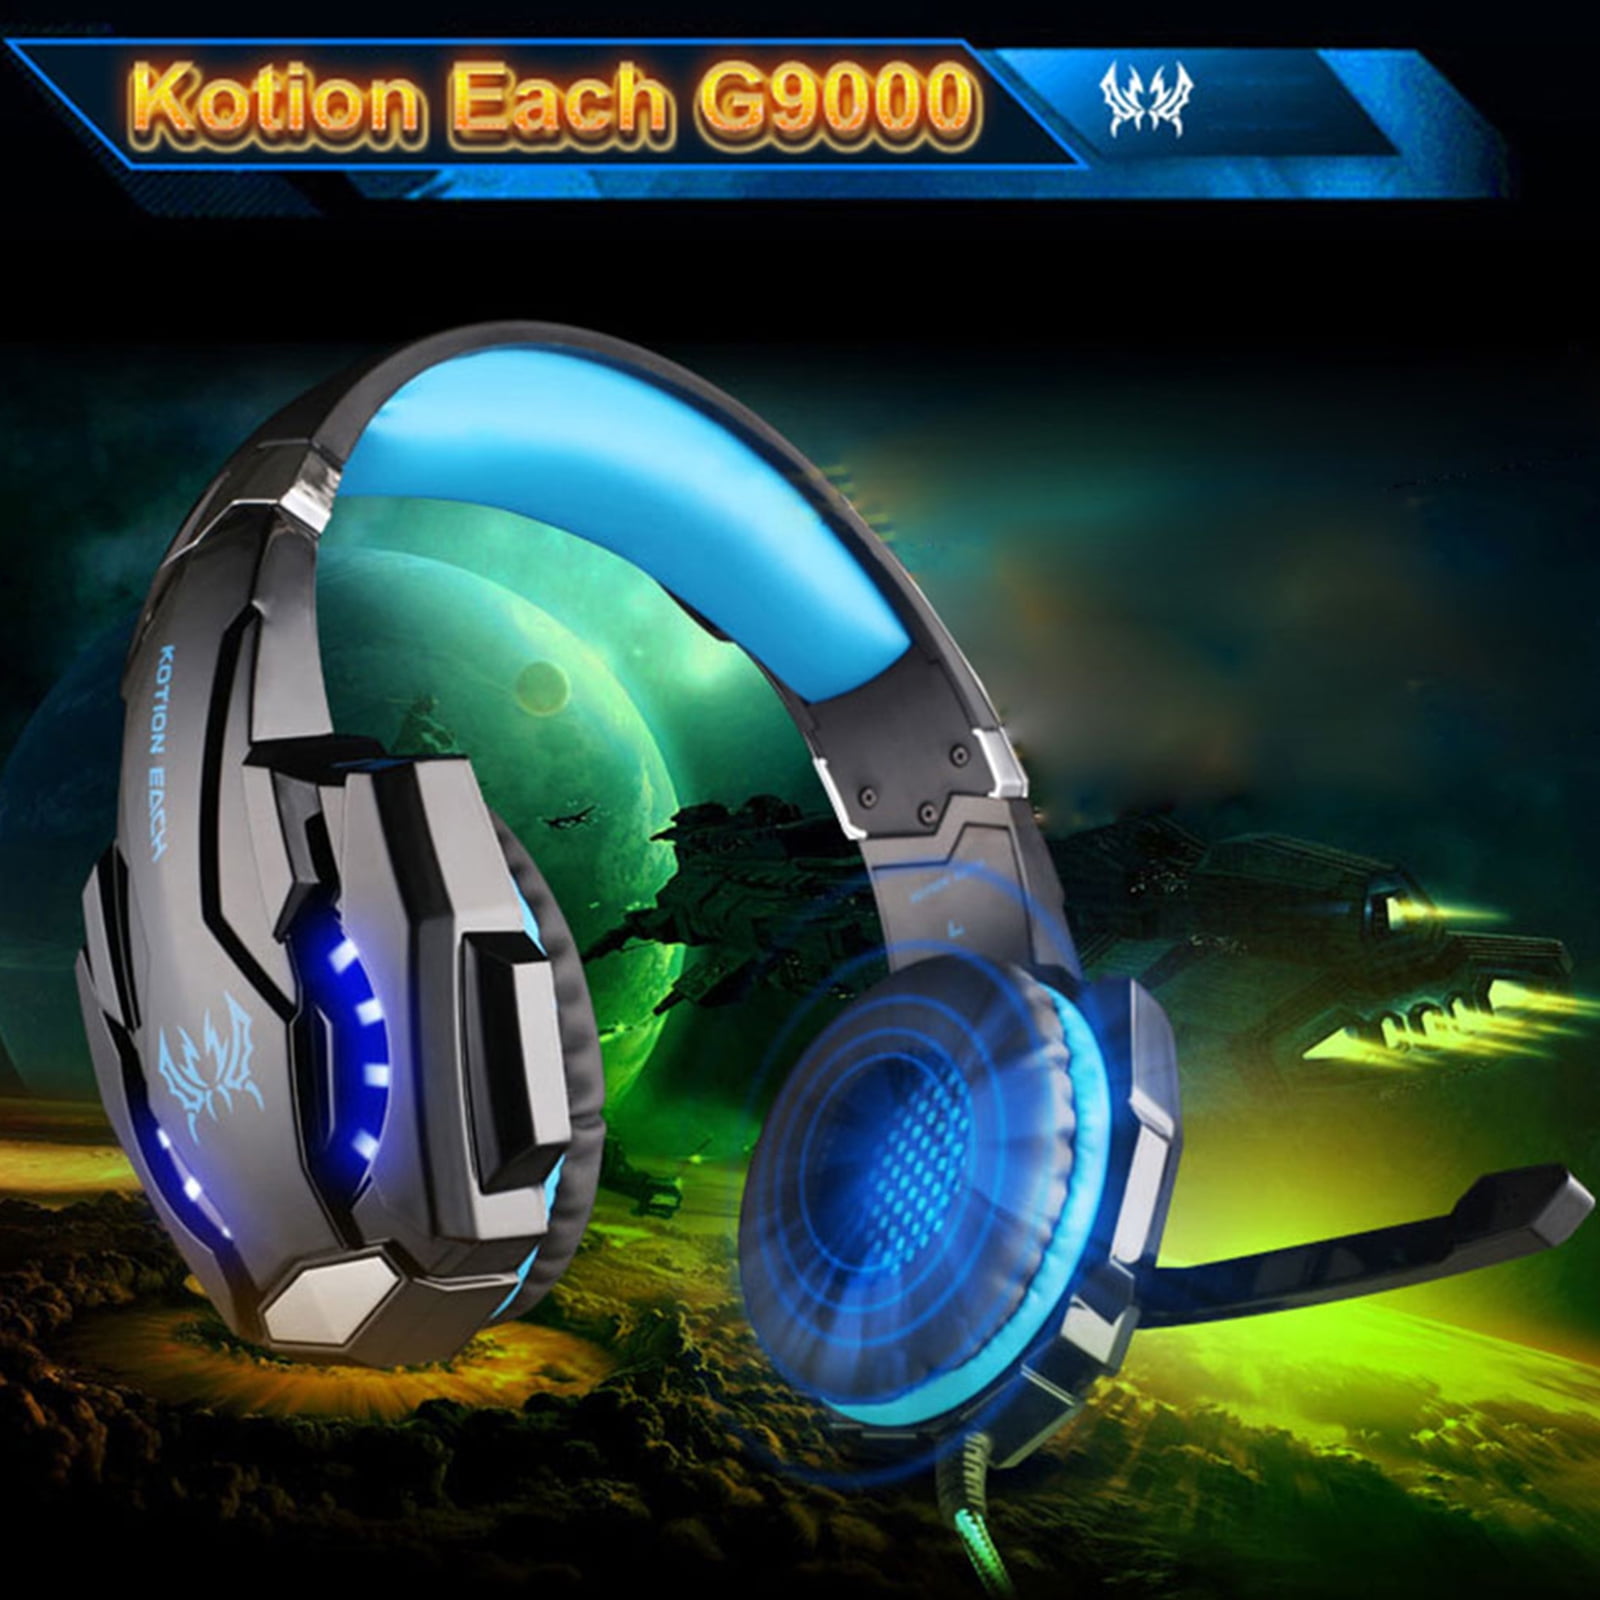 KOTION EACH G9000 3.5mm Gaming Headphone Stereo Game Headset Noise Cancellation Earphone Mic LED Light Control - Walmart.com